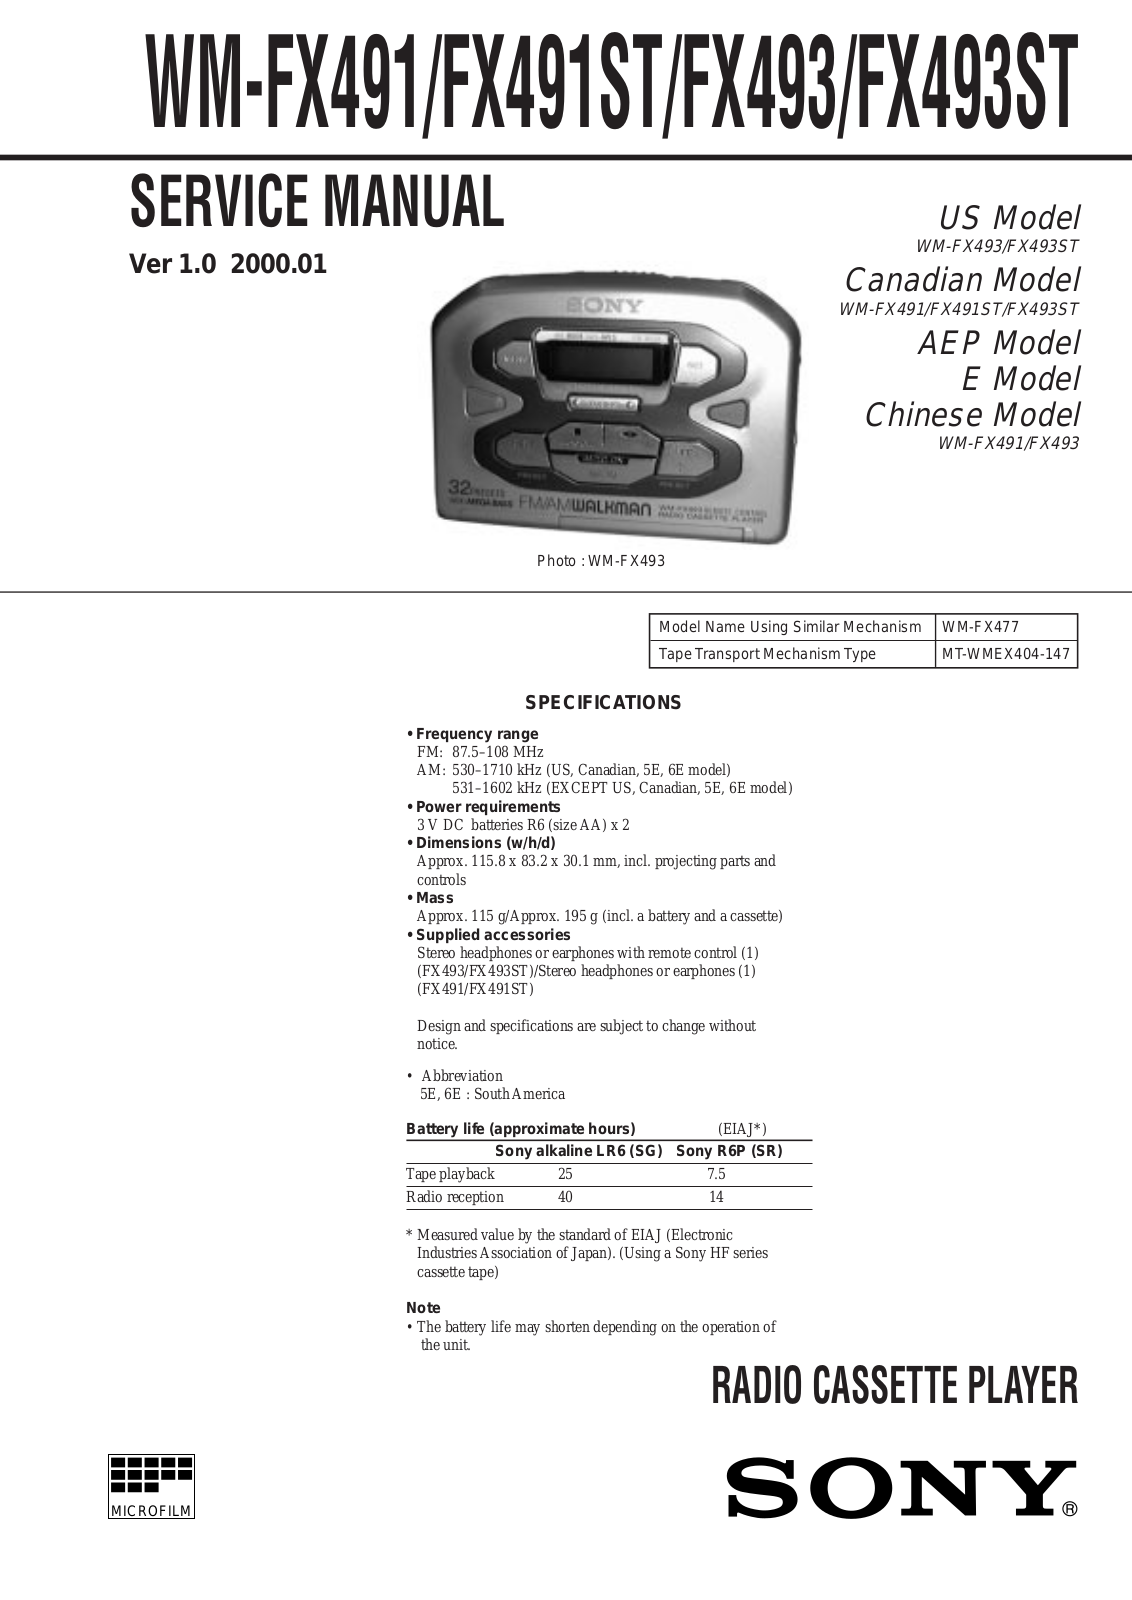 Sony WM-FX491, WM-FX491ST, WM-FX493, WM-FX493ST Service manual